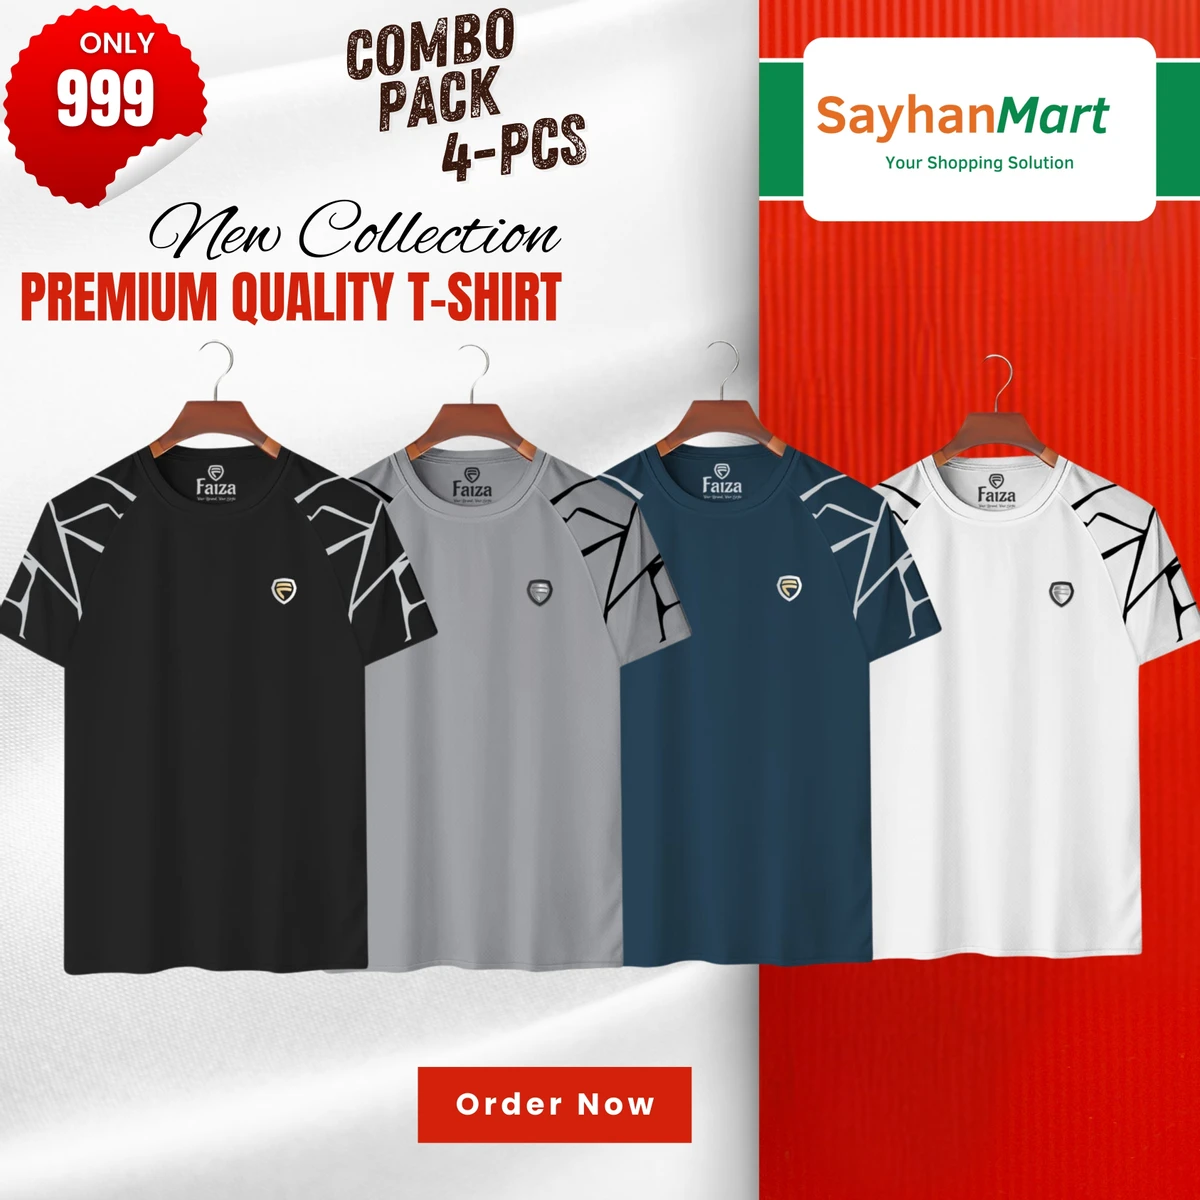 Combo Pack 4-Pcs Premium Quality T-Shirt